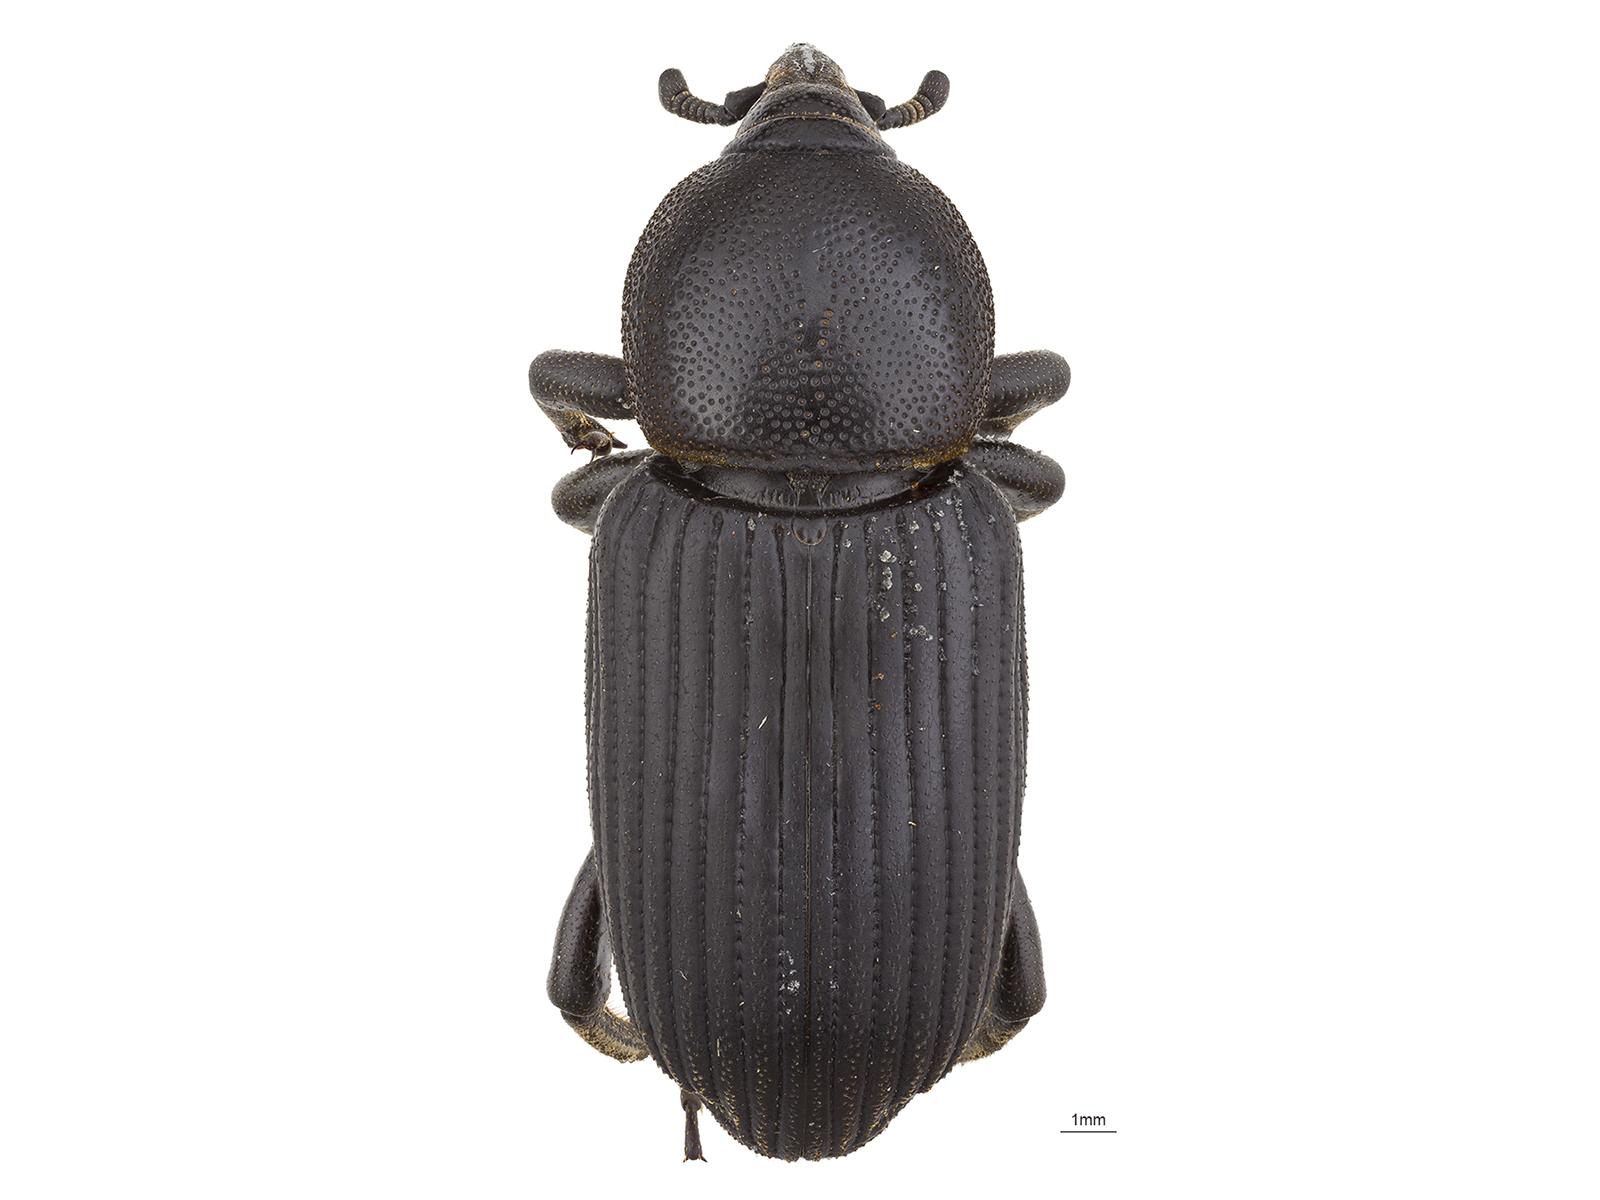 Mesocordylus striatus (Boheman, 1838)